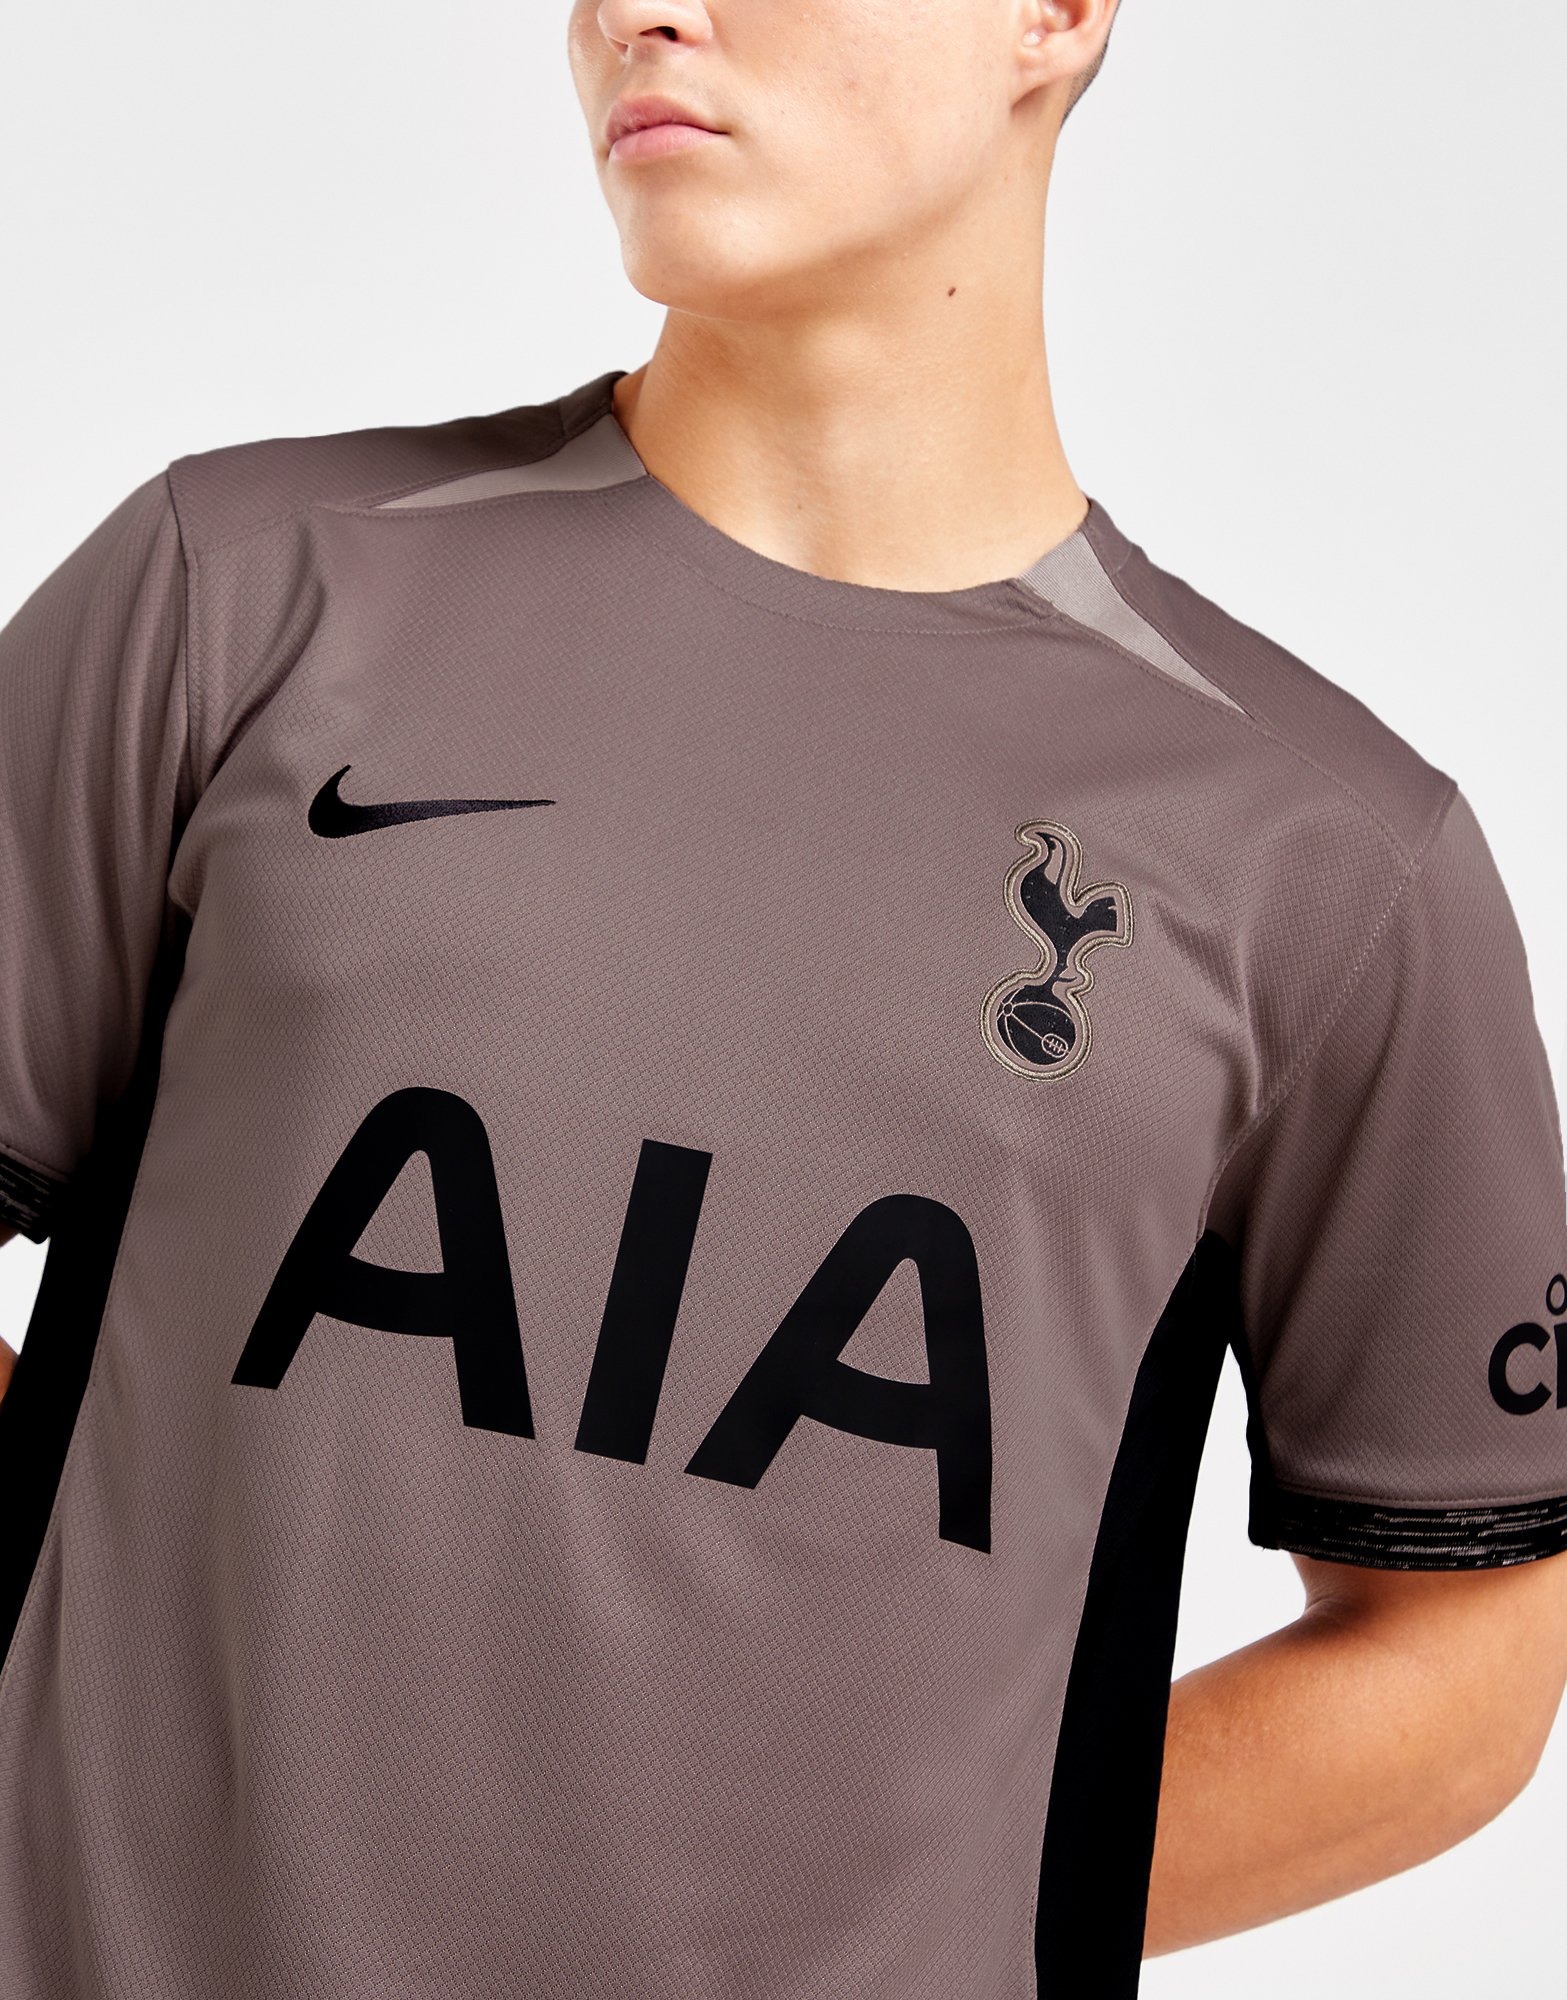 New Spurs Kit 13-14- Under Armour Tottenham Hotspur Home Away